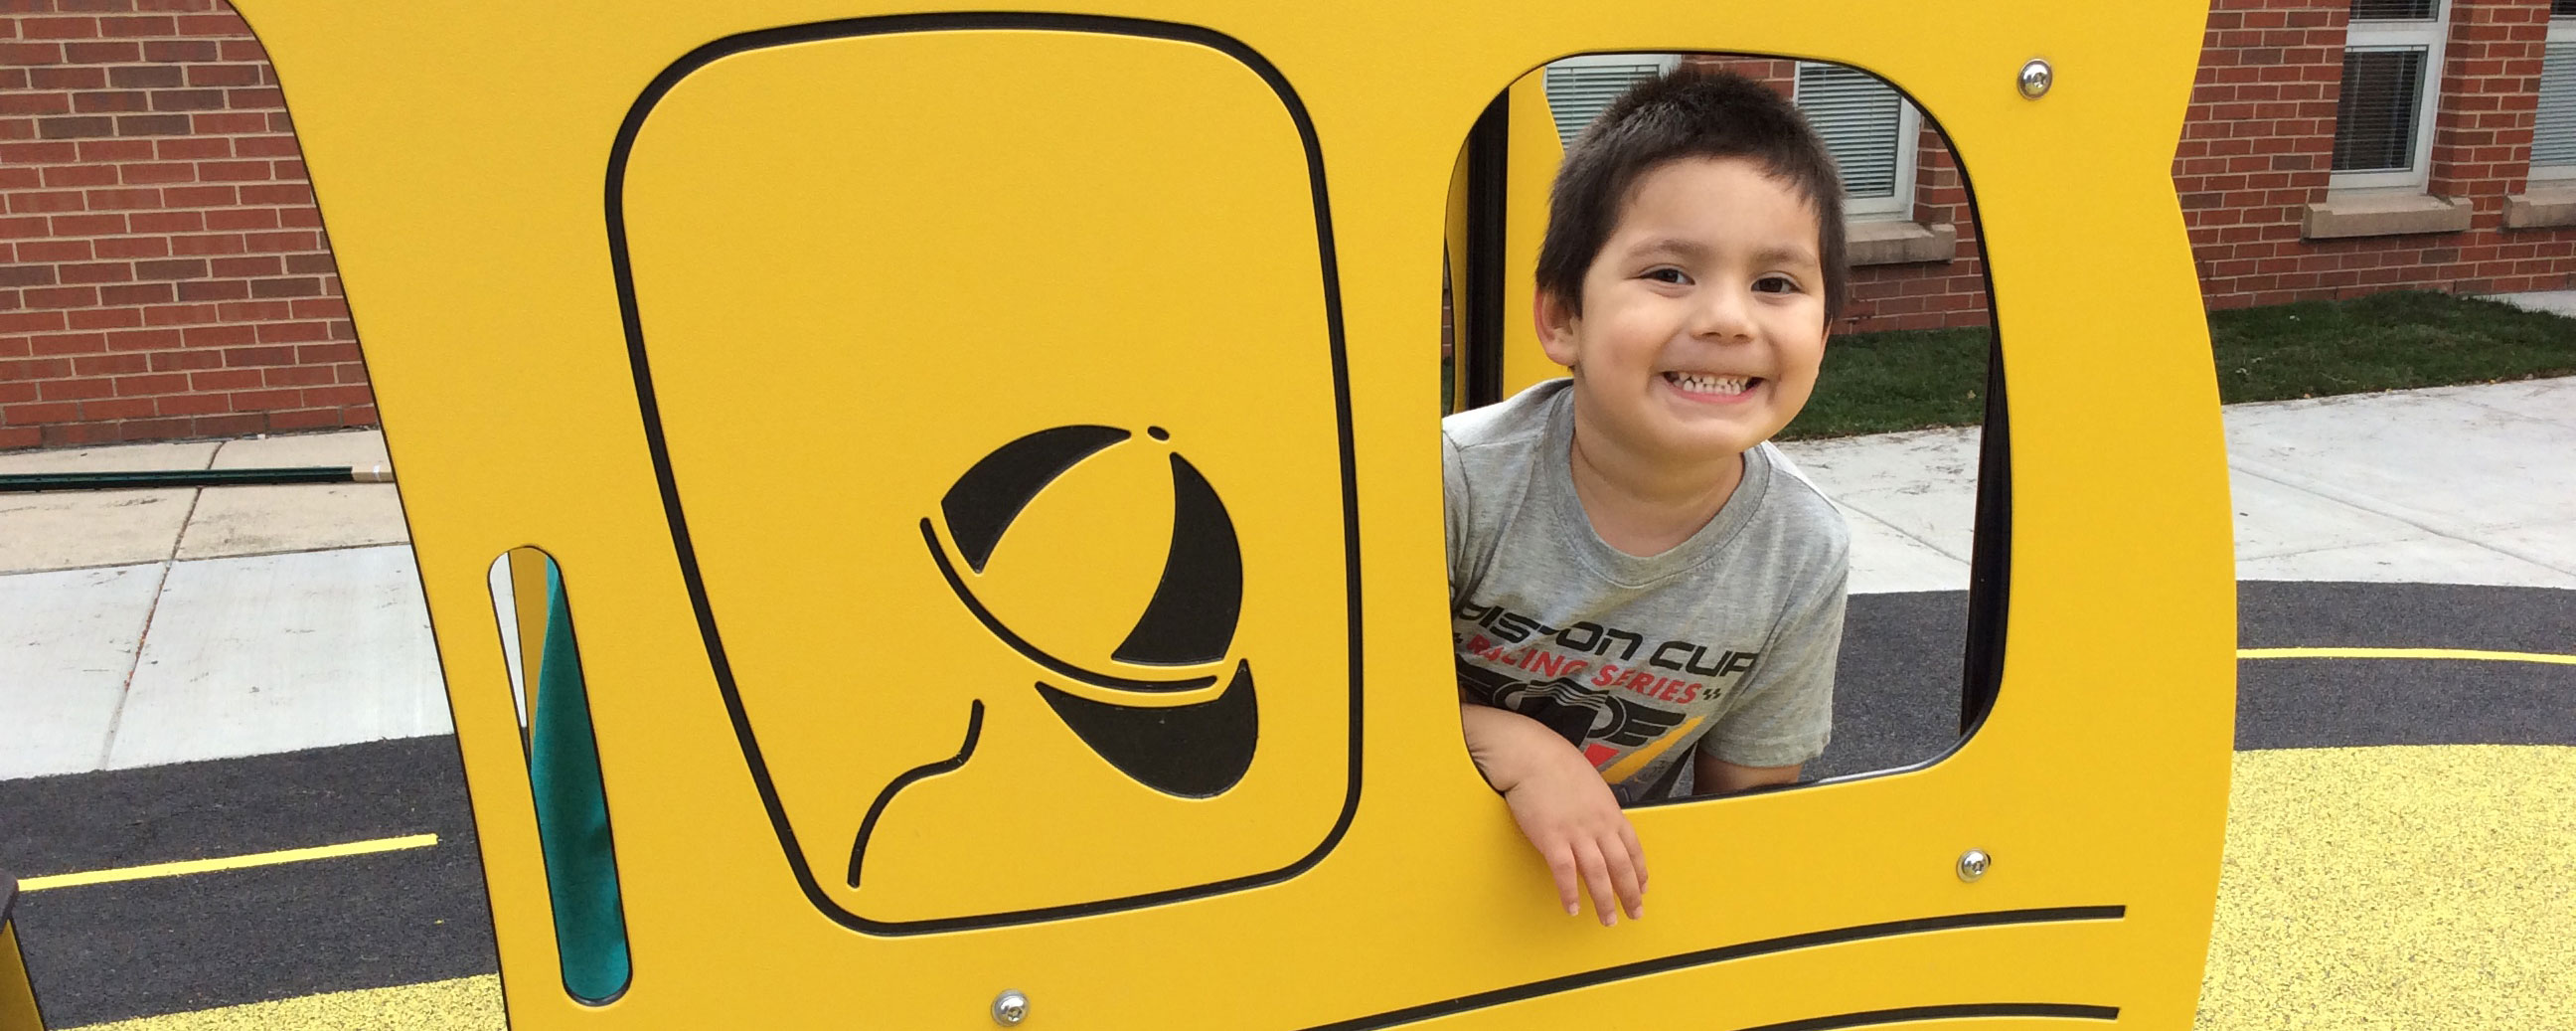 Photo of boy on playground schoolbus